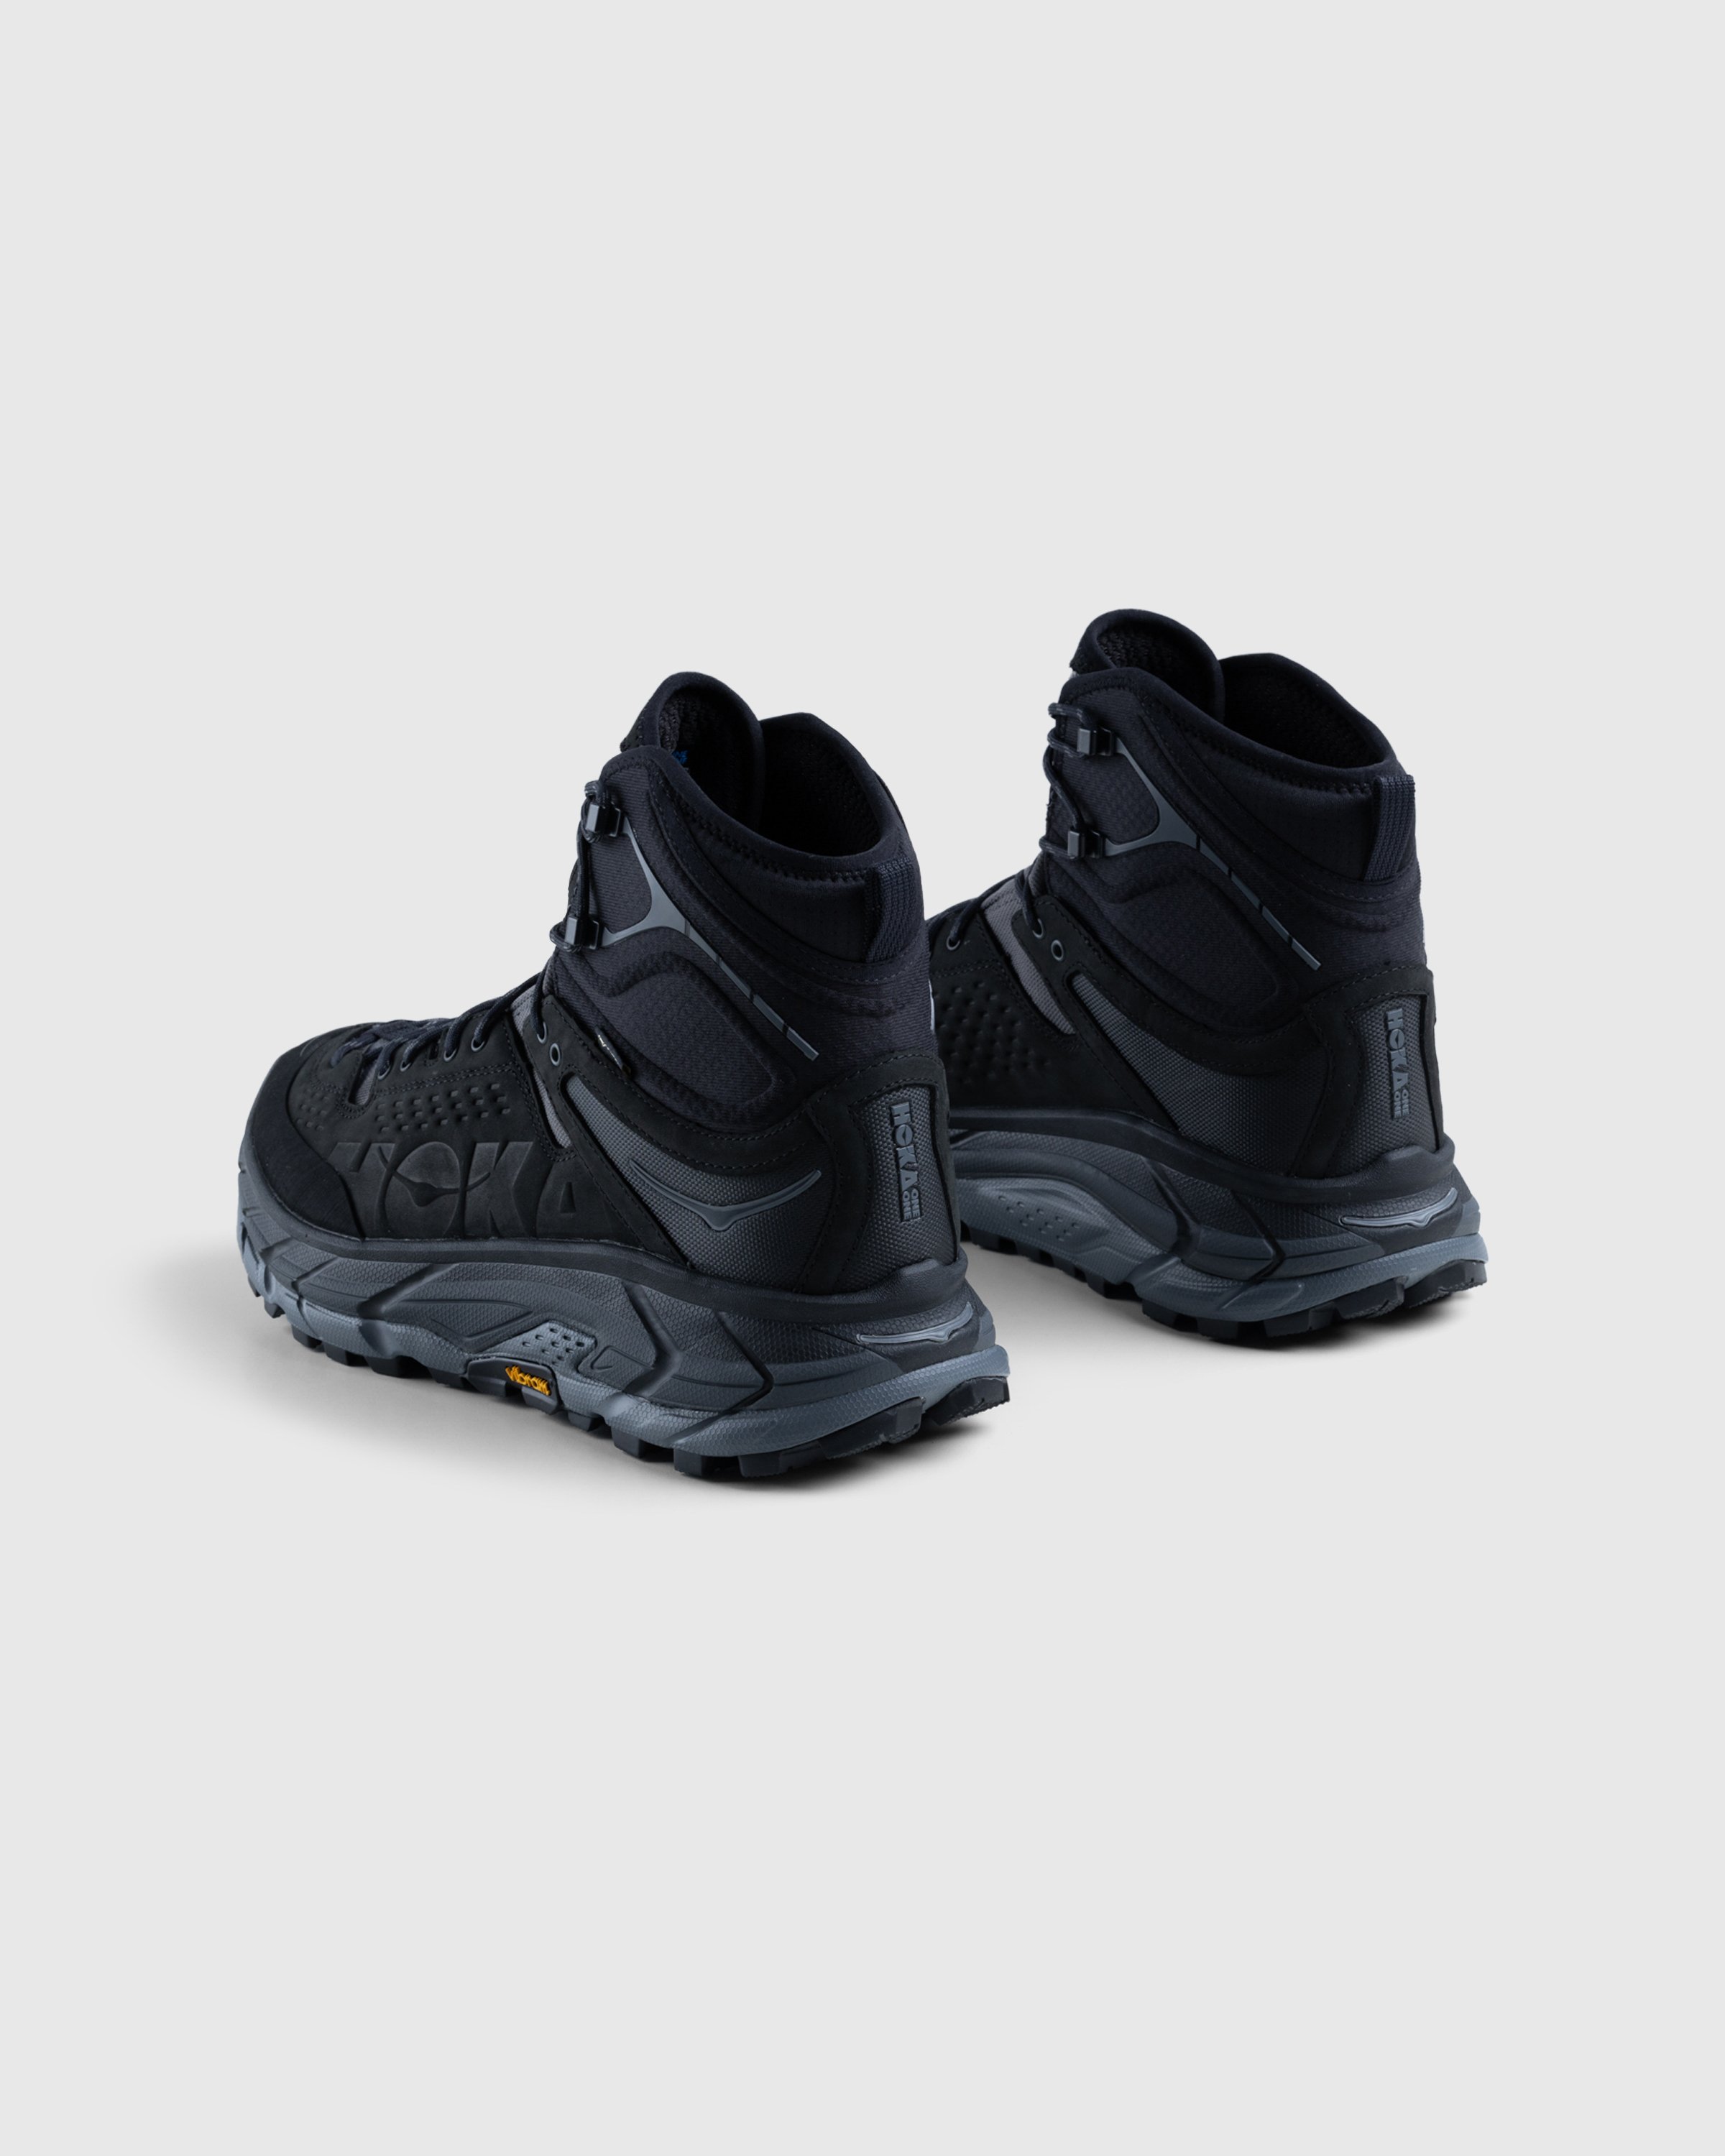 HOKA - Tor Ultra Hi Black - Footwear - Black - Image 4